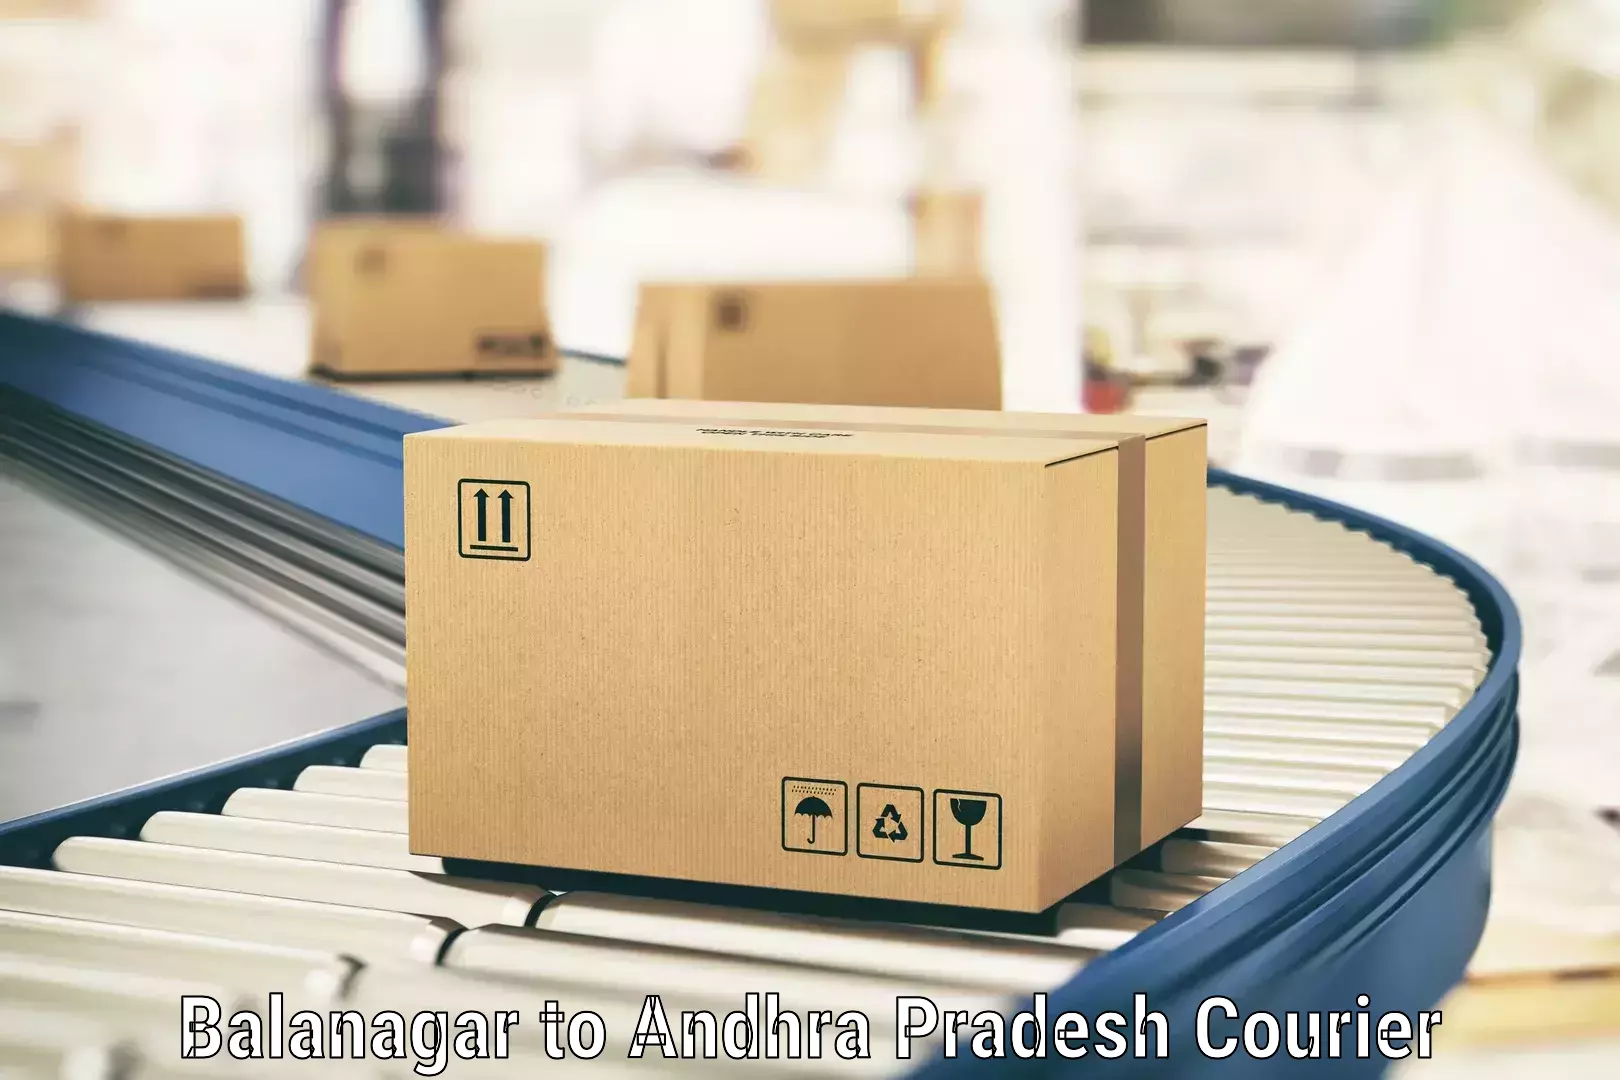 Custom courier packaging Balanagar to Vijayawada